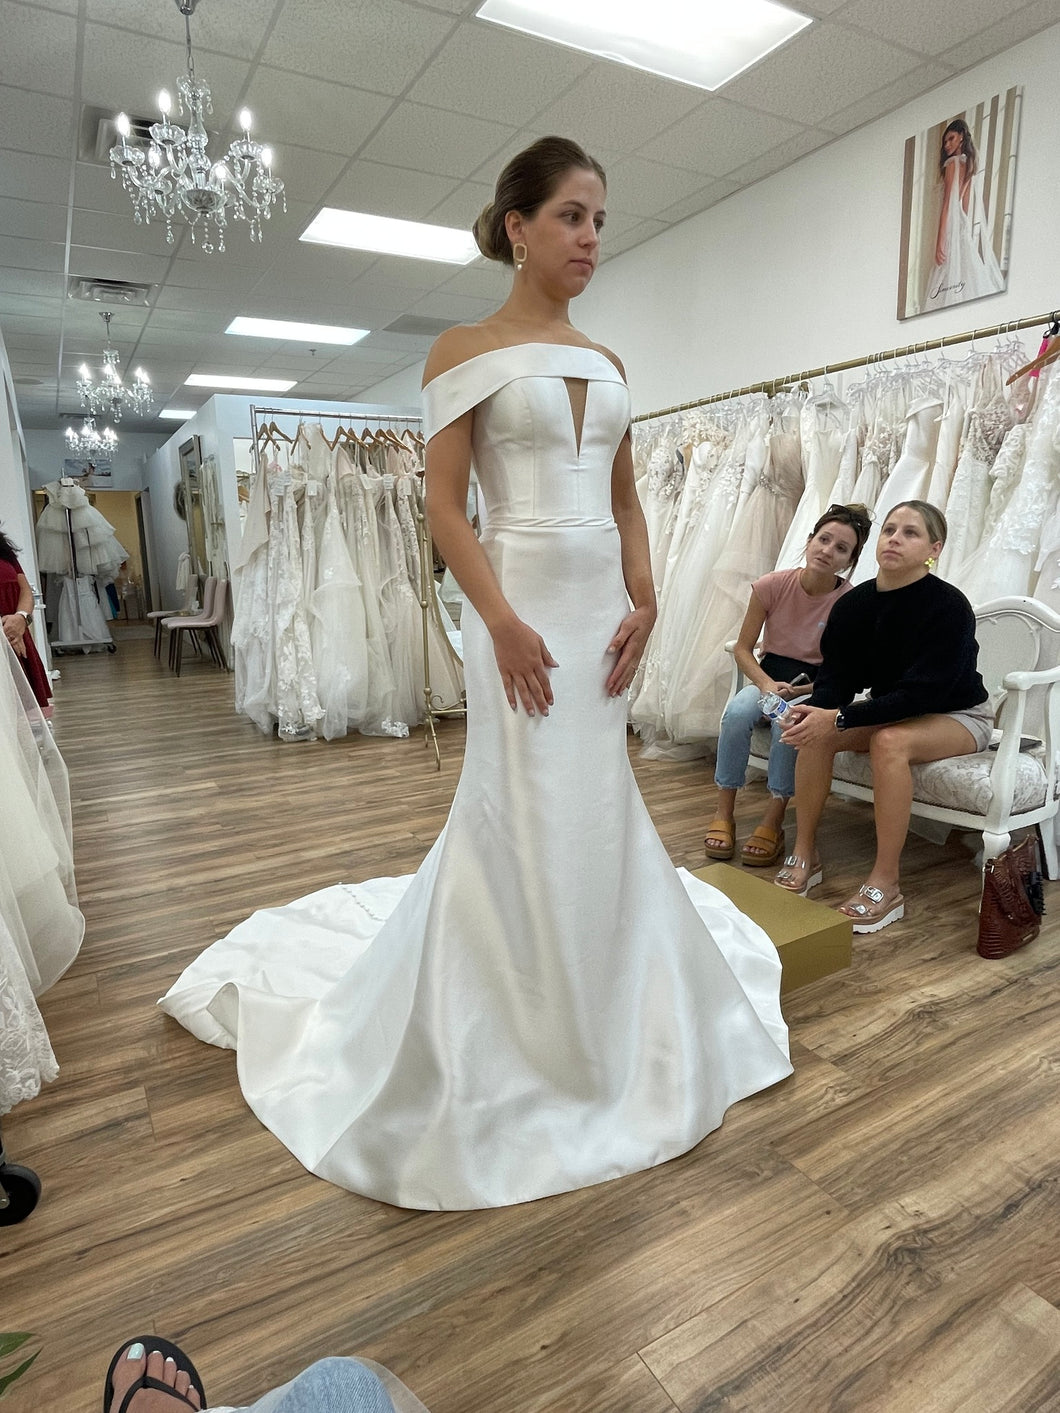 Maggie Sottero 'Crete' wedding dress size-00 NEW